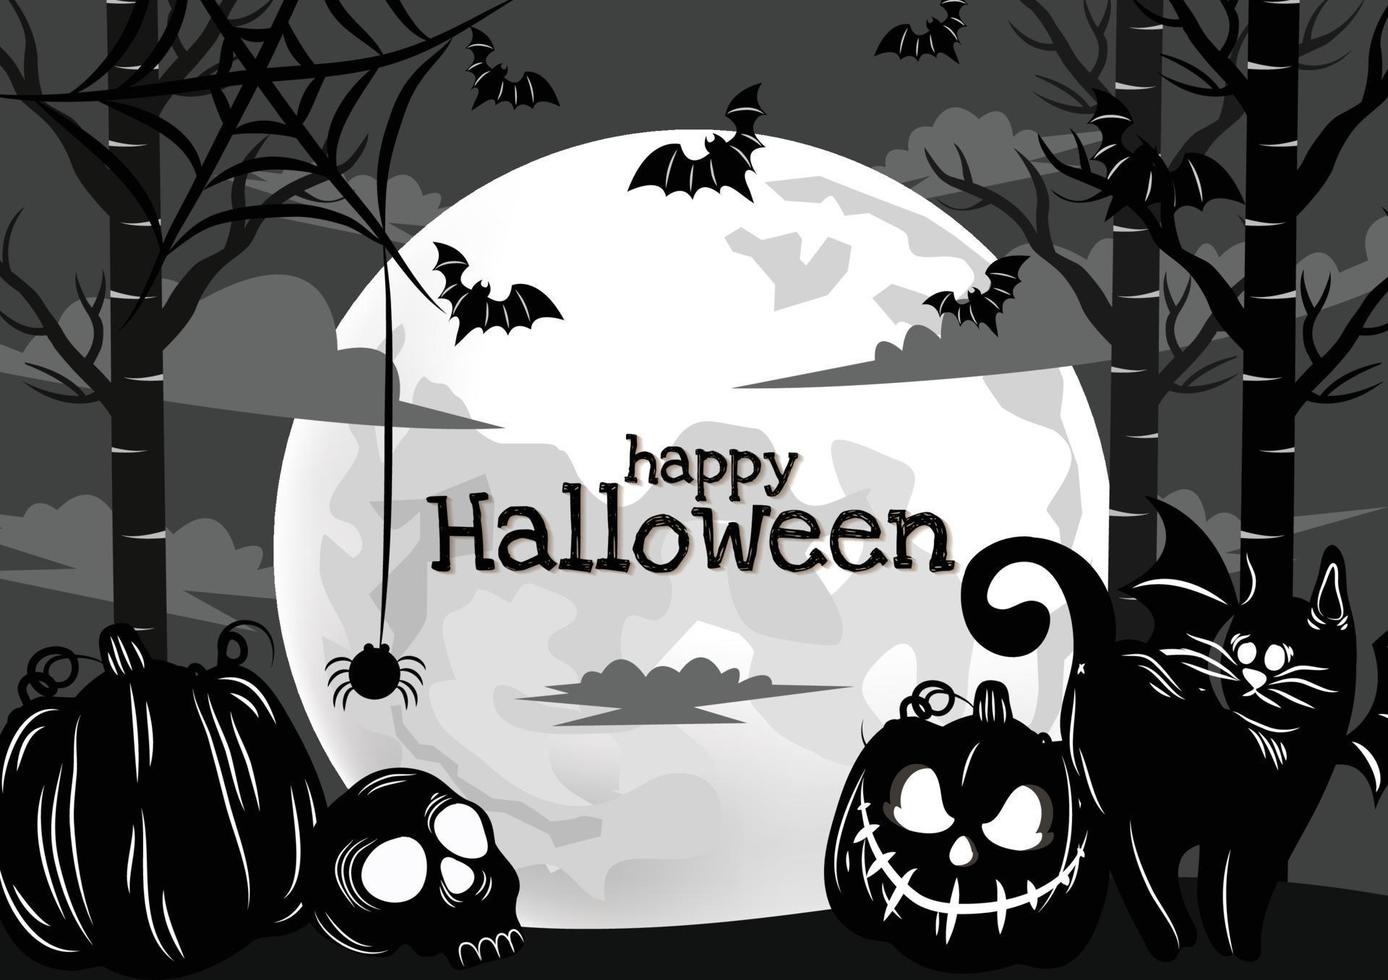 spooky pumpkins and black cat banner gray background design vector